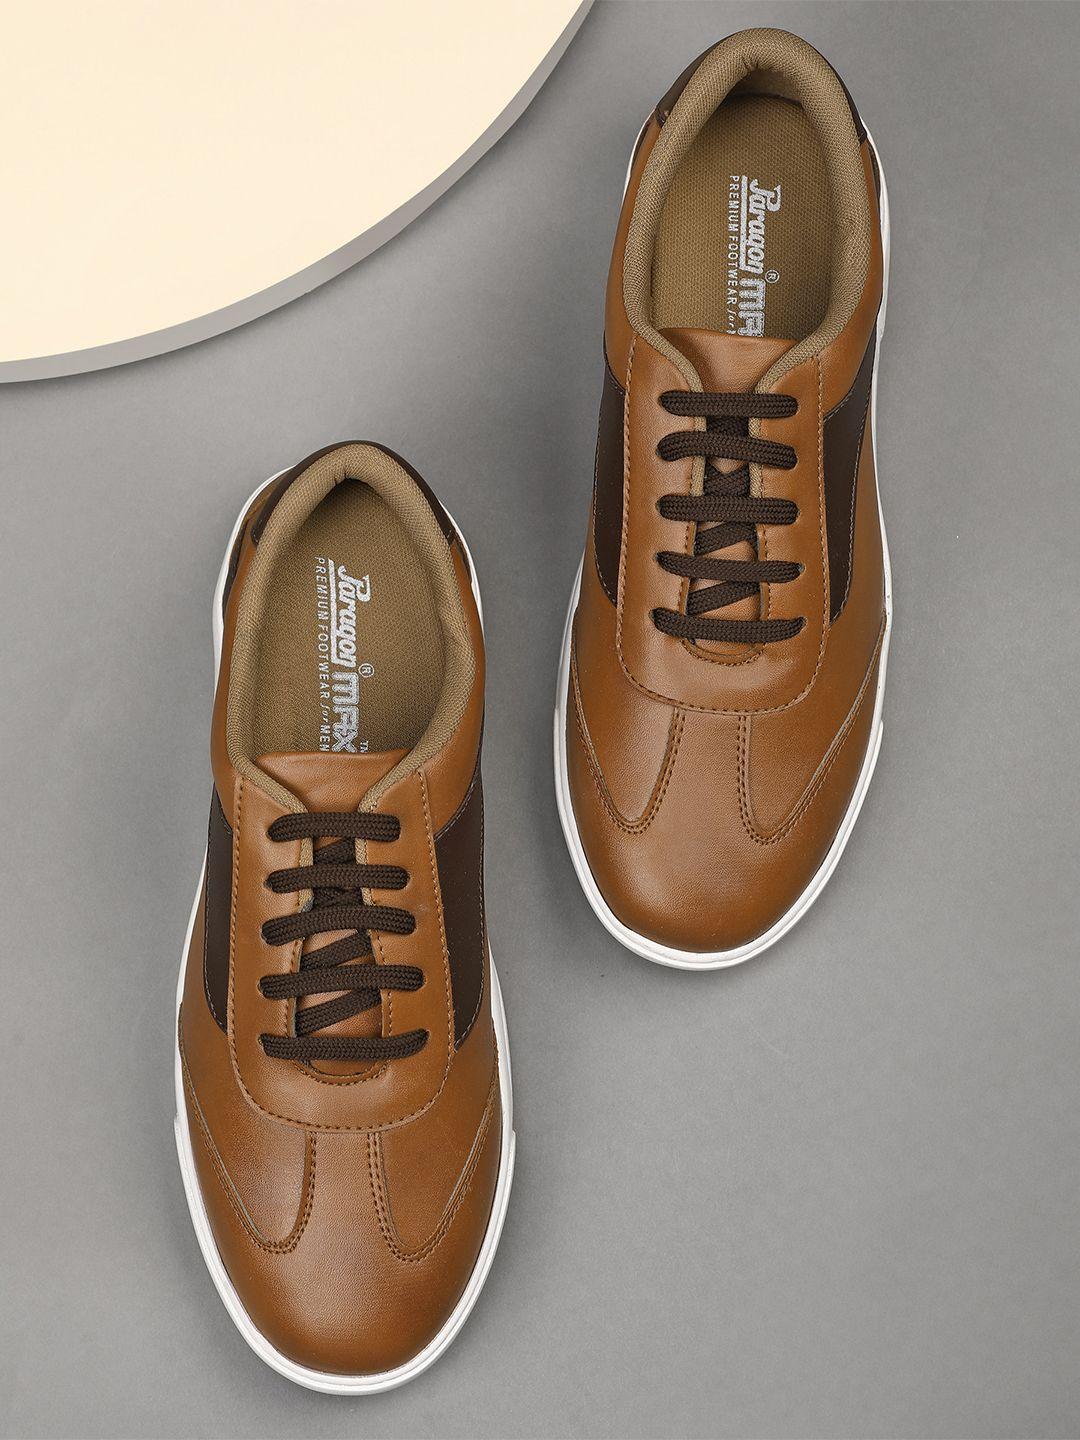 paragon-men-textured-comfort-insole-contrast-sole-sneakers